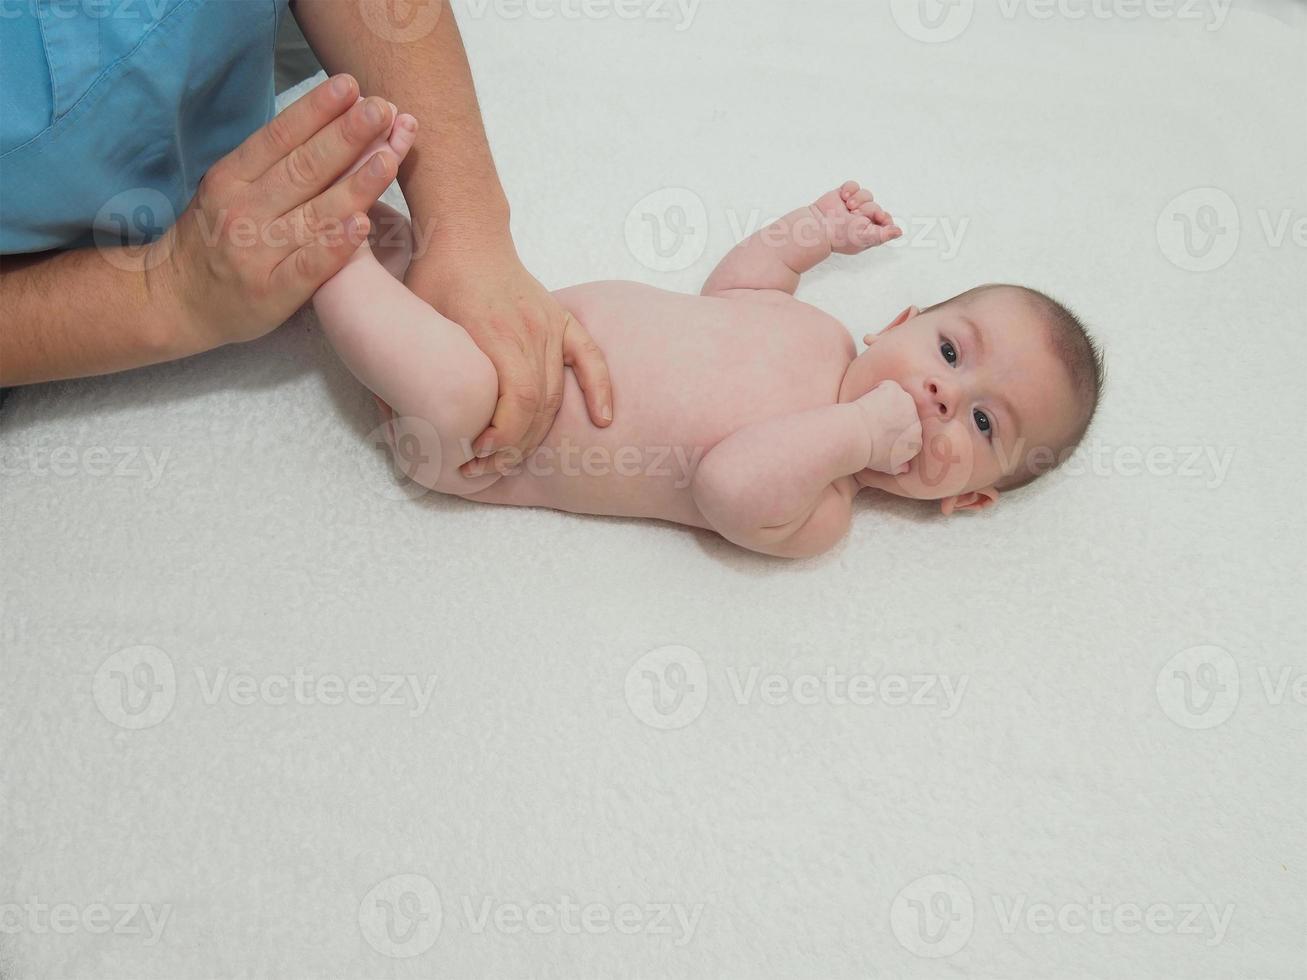 doktor massage liten kaukasiska baby foto